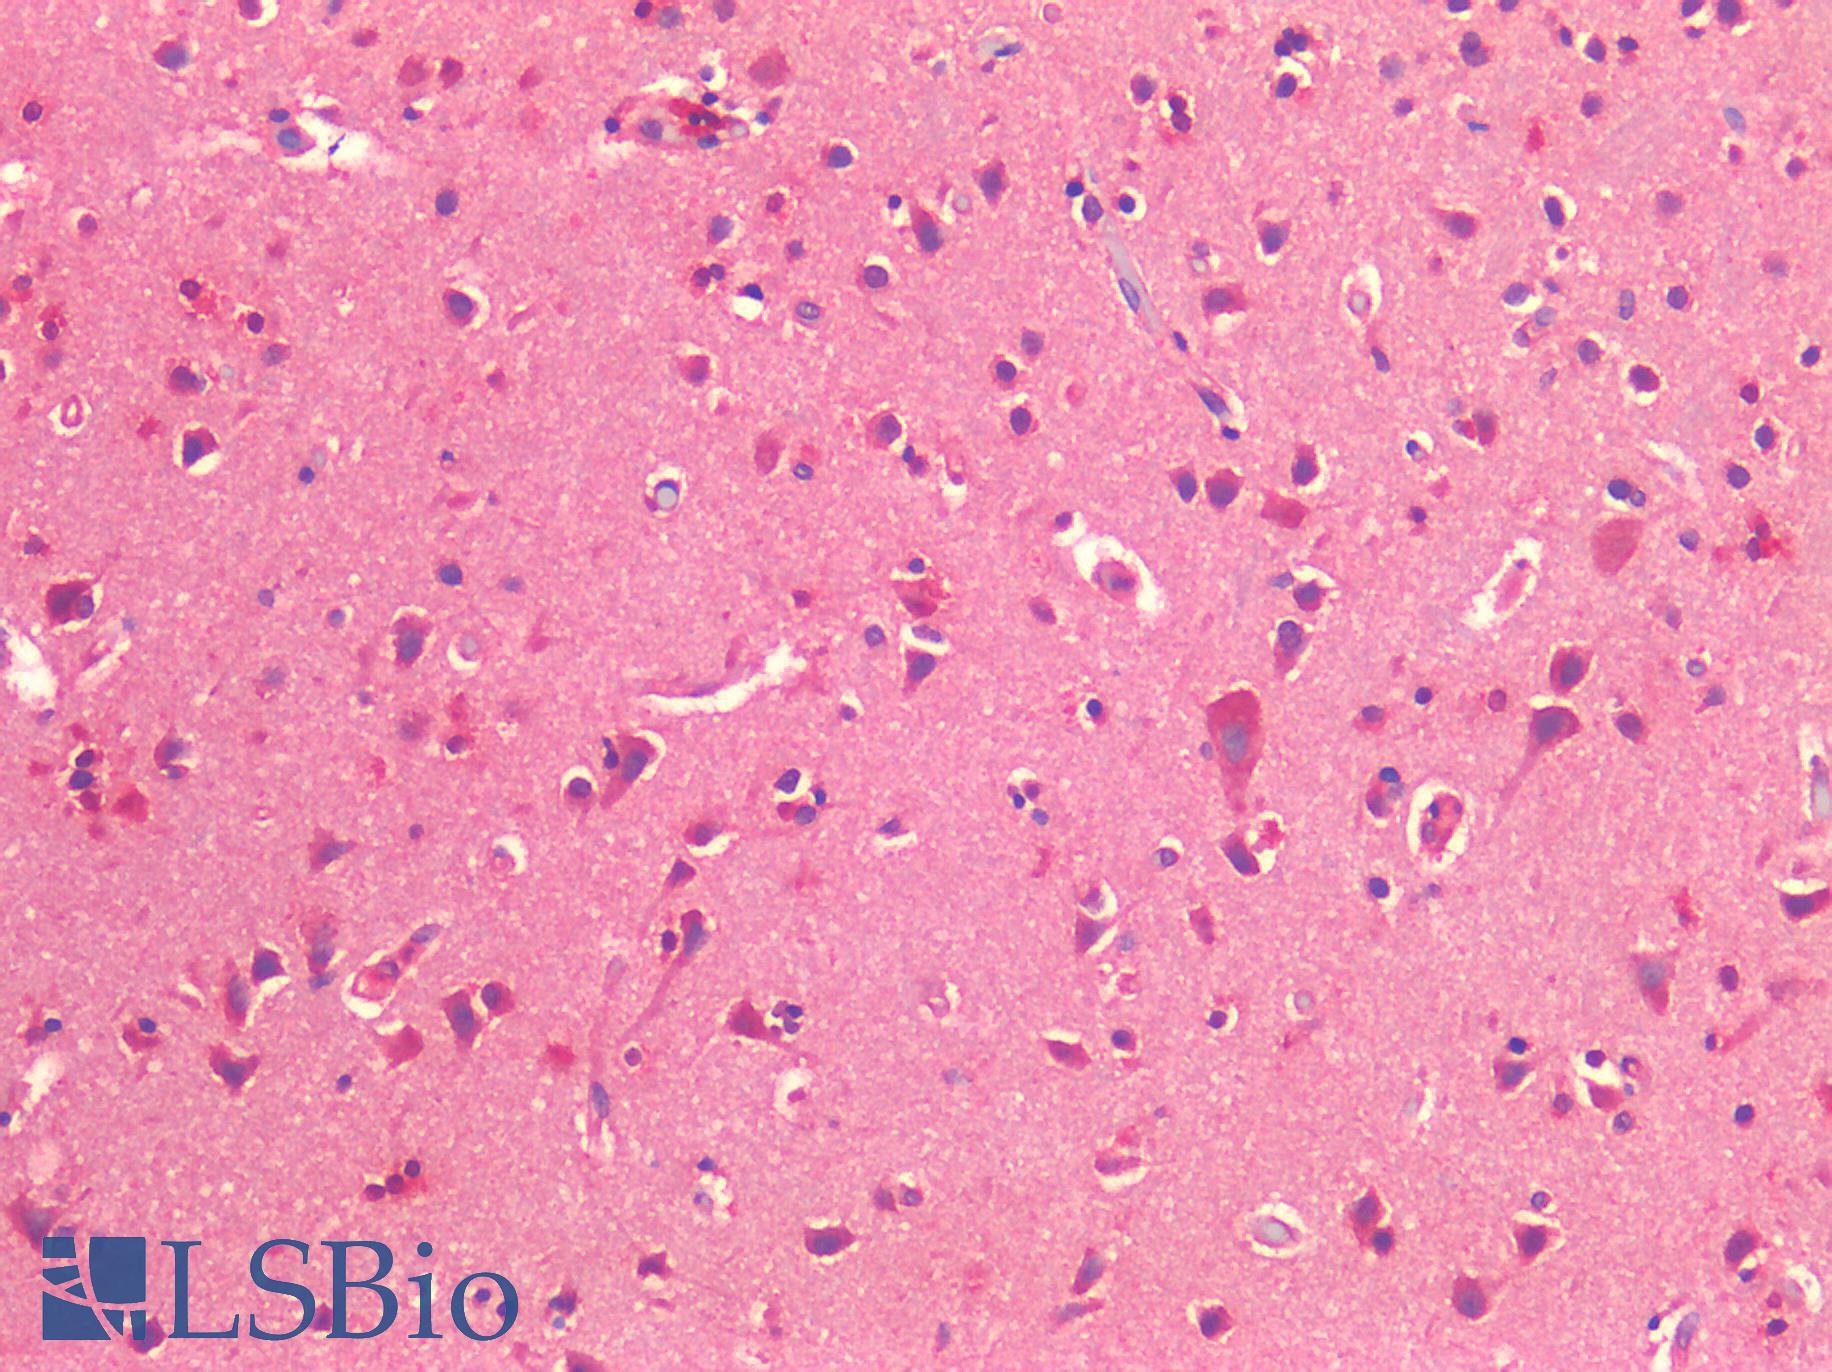 ROR1 Antibody - Human Brain, Cortex: Formalin-Fixed, Paraffin-Embedded (FFPE)